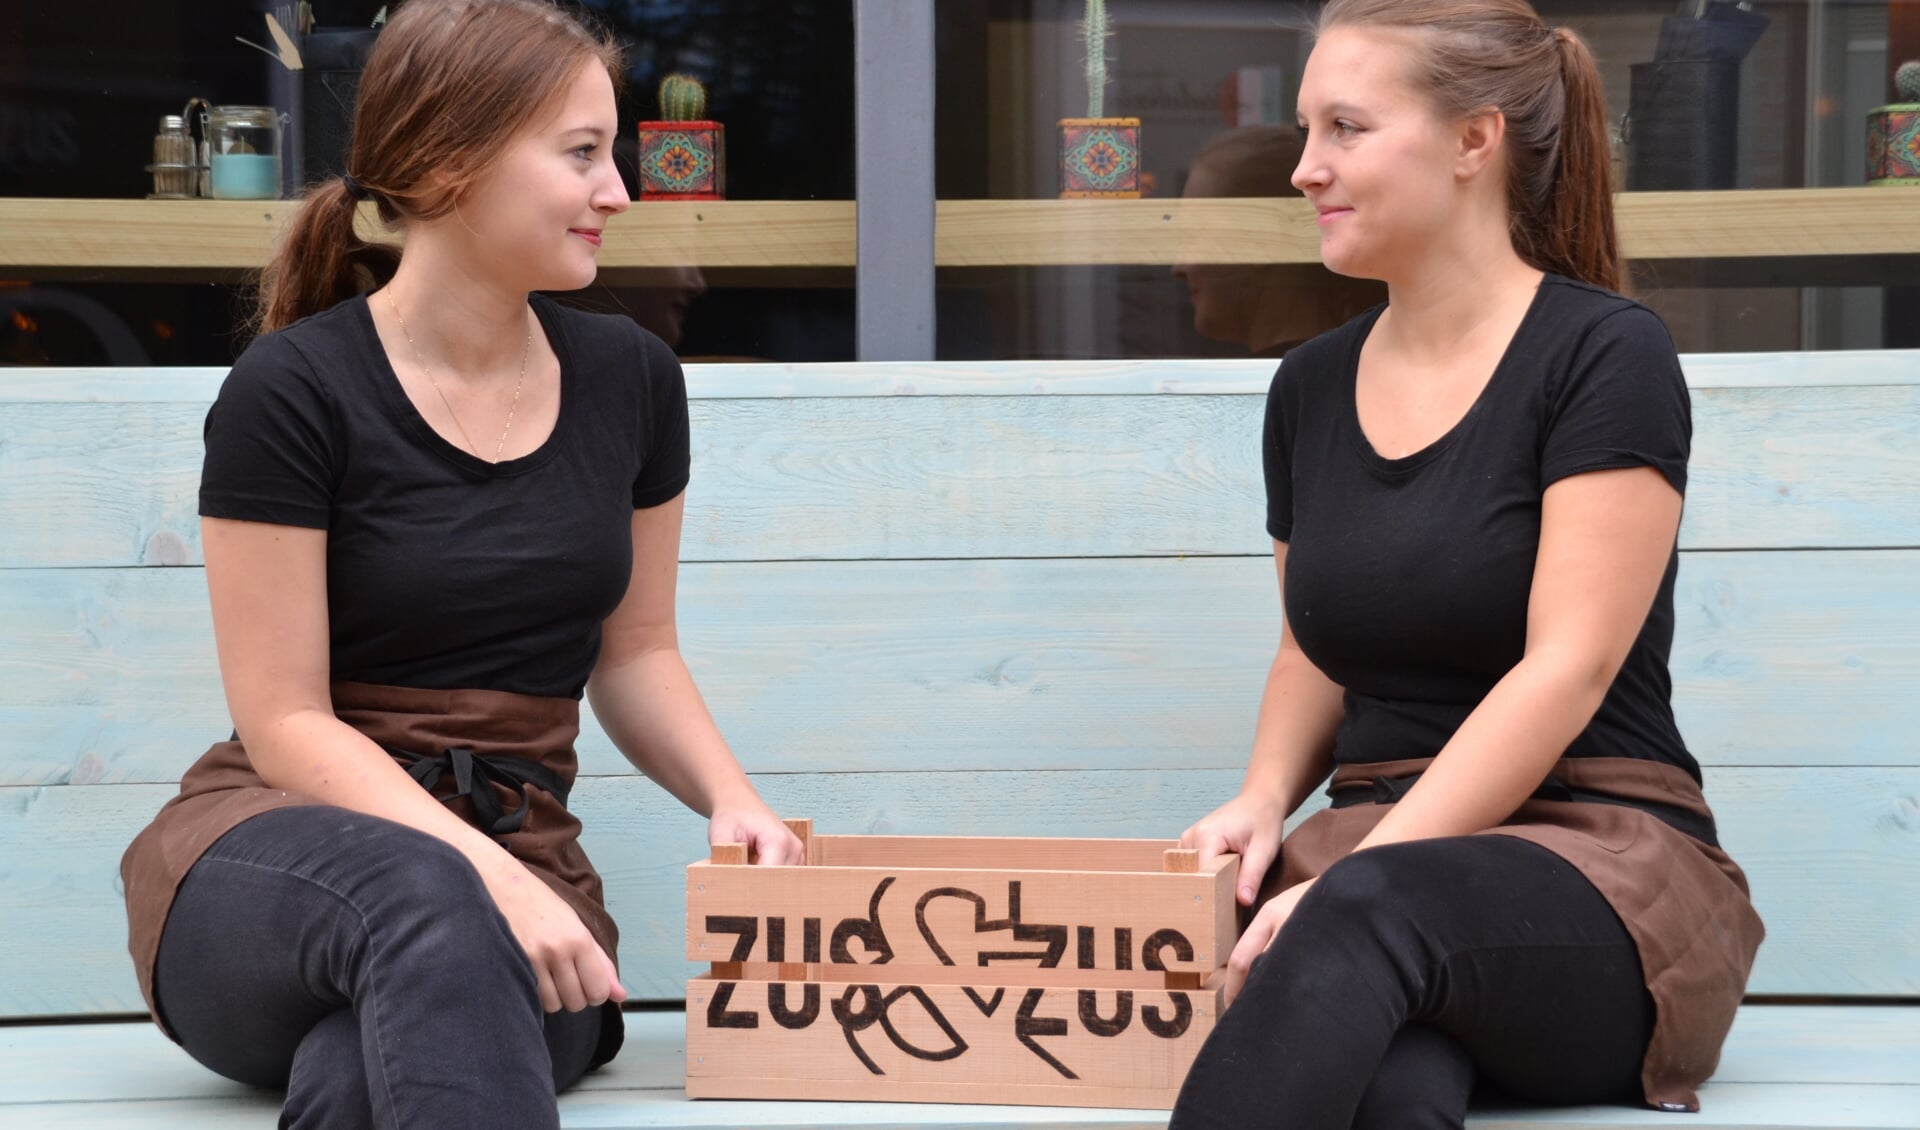 Dynande (links) en Sharissa van Leijenhorst runnen samen lunchroom Zus & Zus.